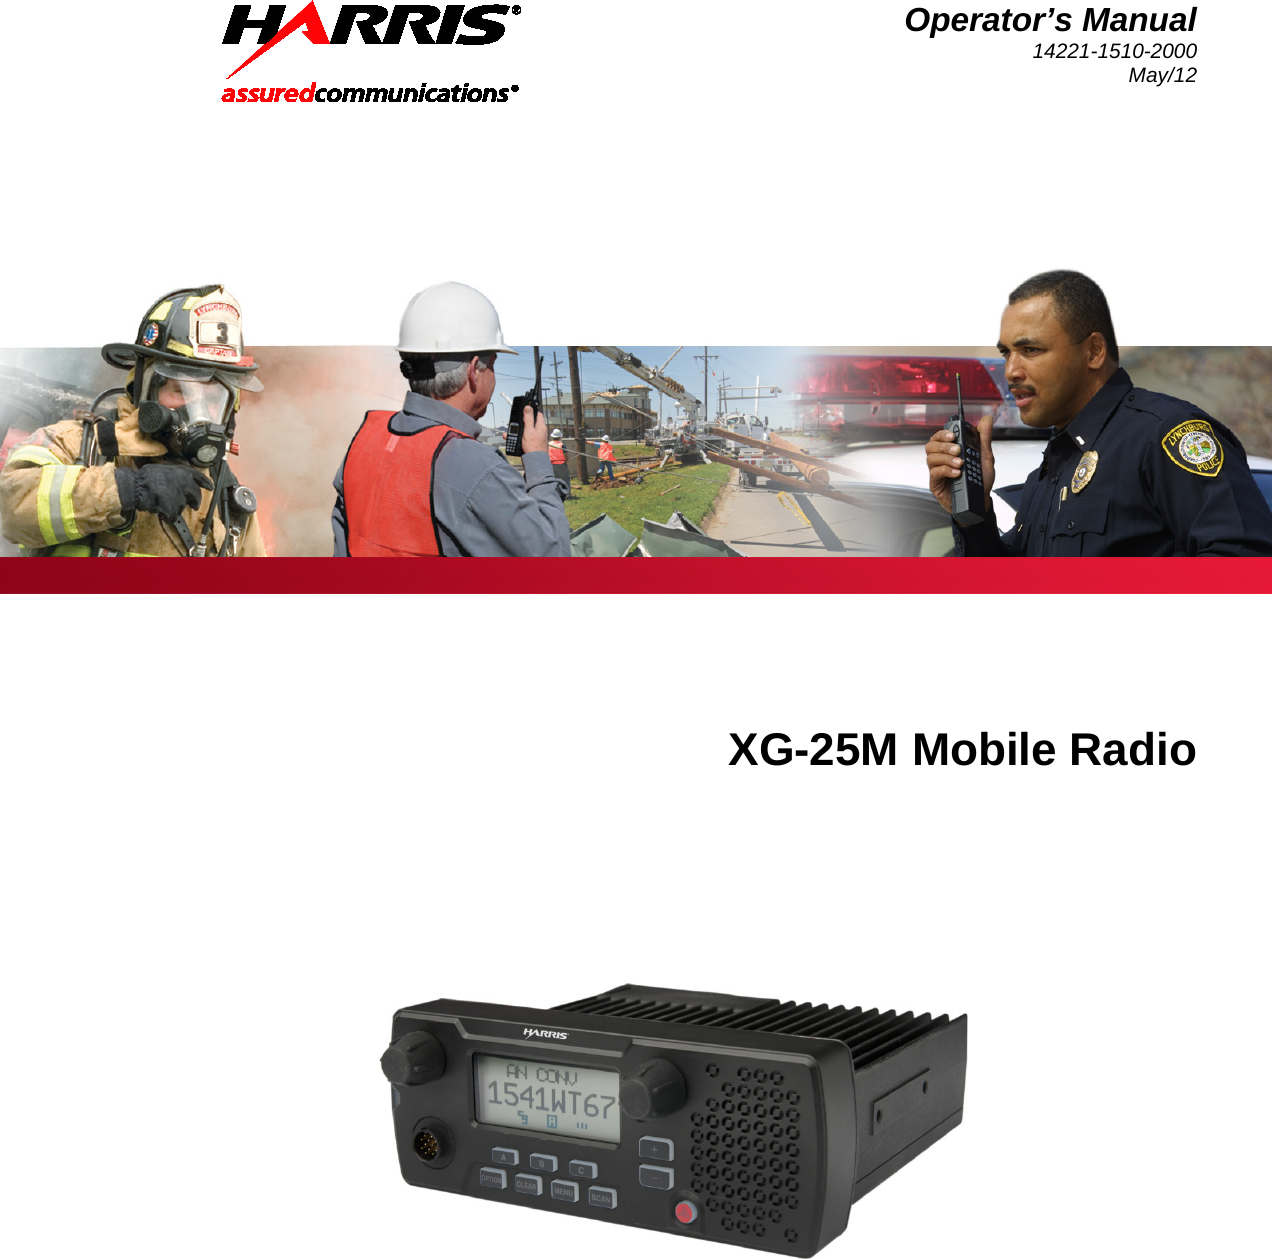 Operator’s Manual 14221-1510-2000 May/12   XG-25M Mobile Radio   